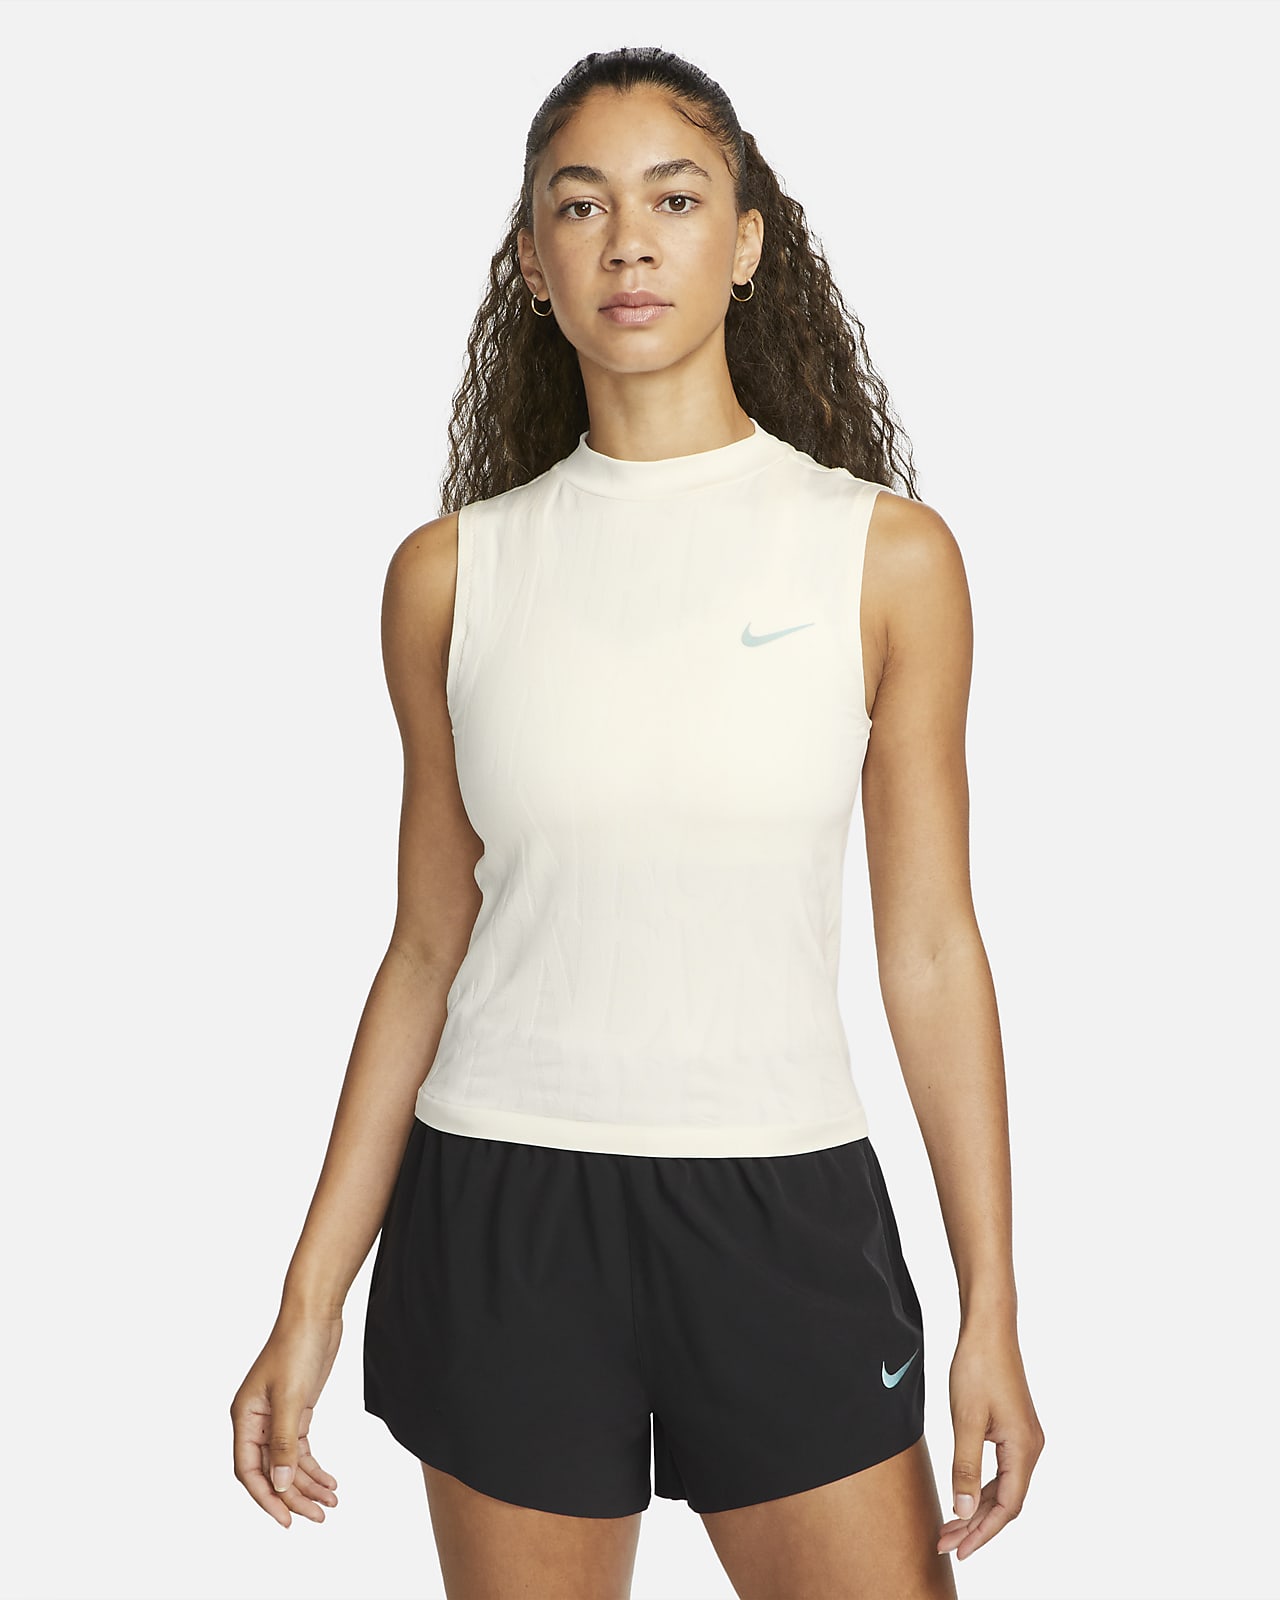 Grey Tank Tops & Sleeveless Shirts. Nike CA